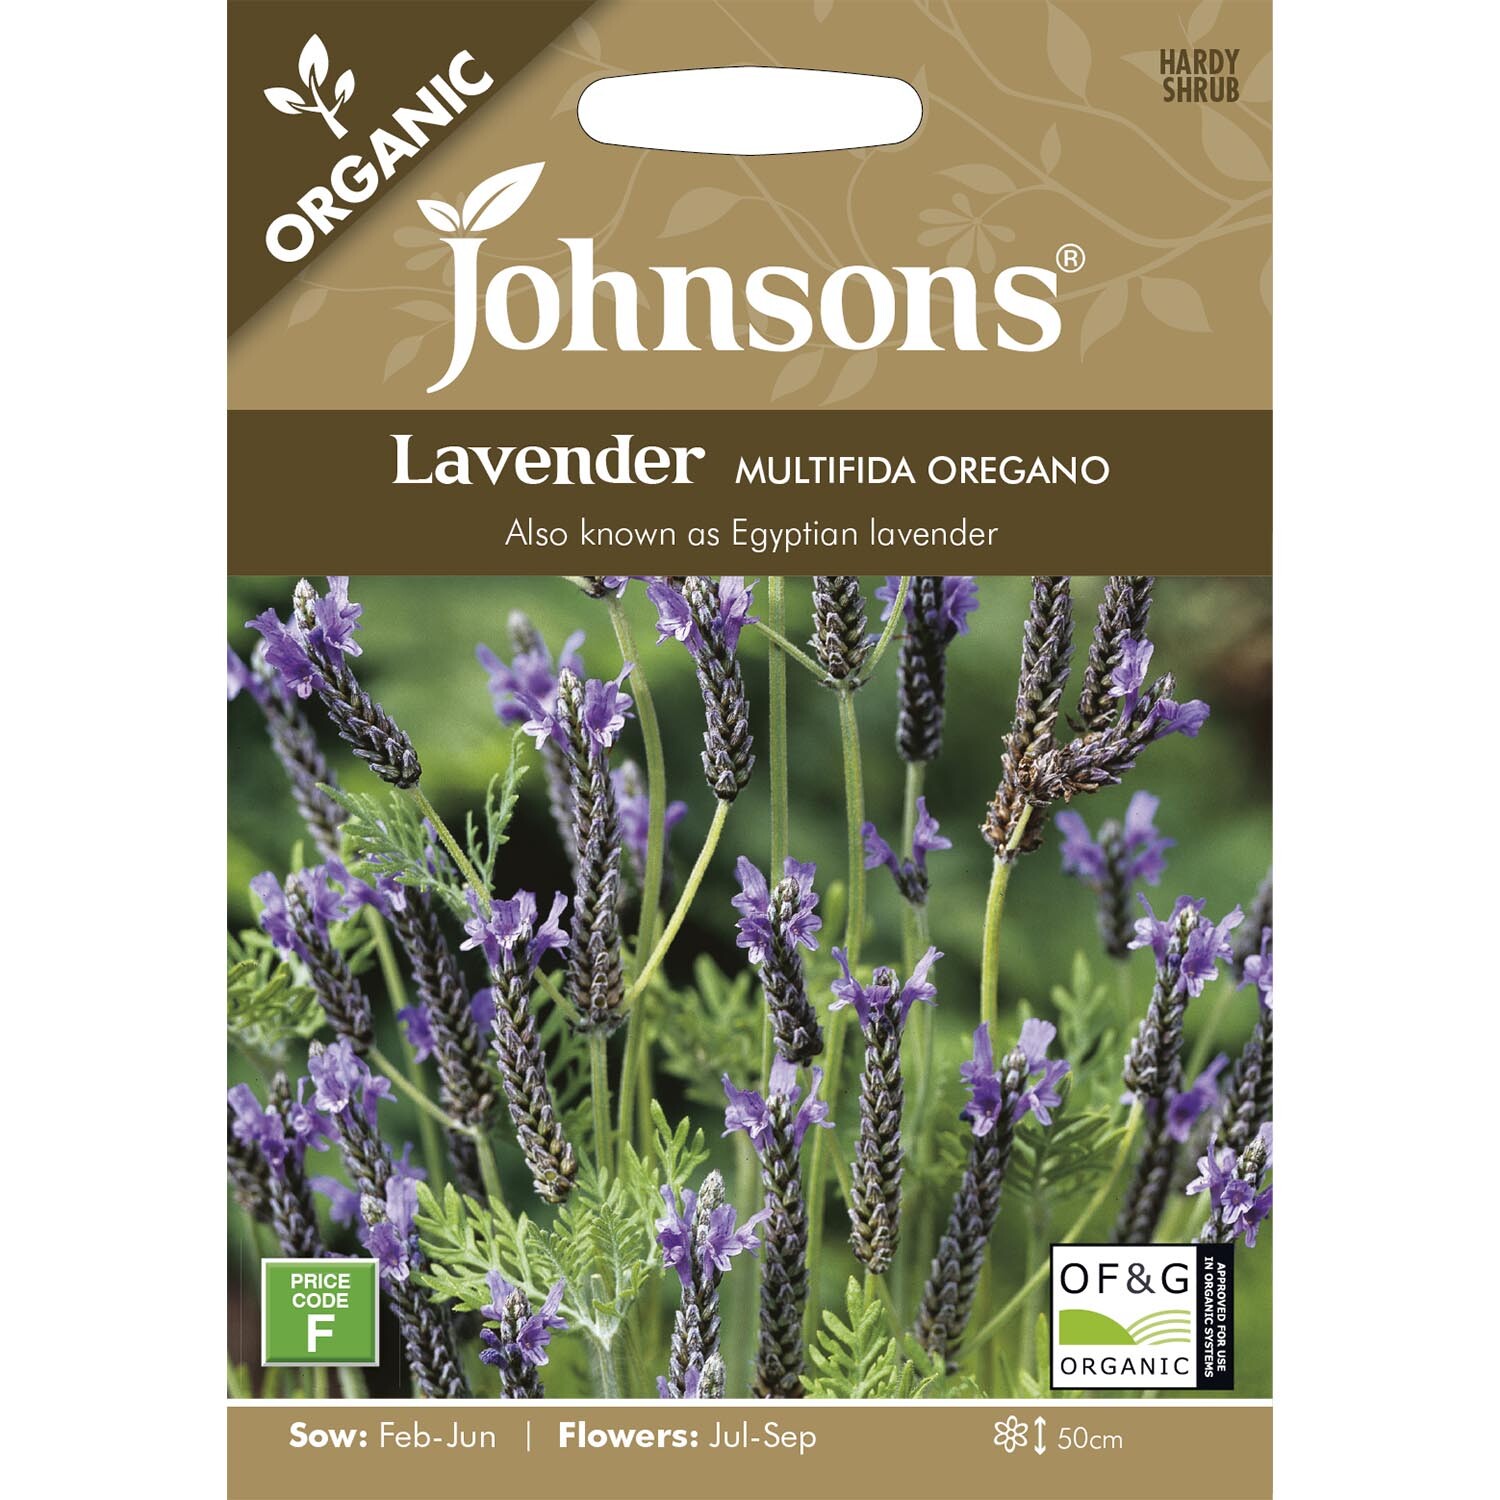 Johnsons Lavender Multifida Oregano Flower Seeds Image 2